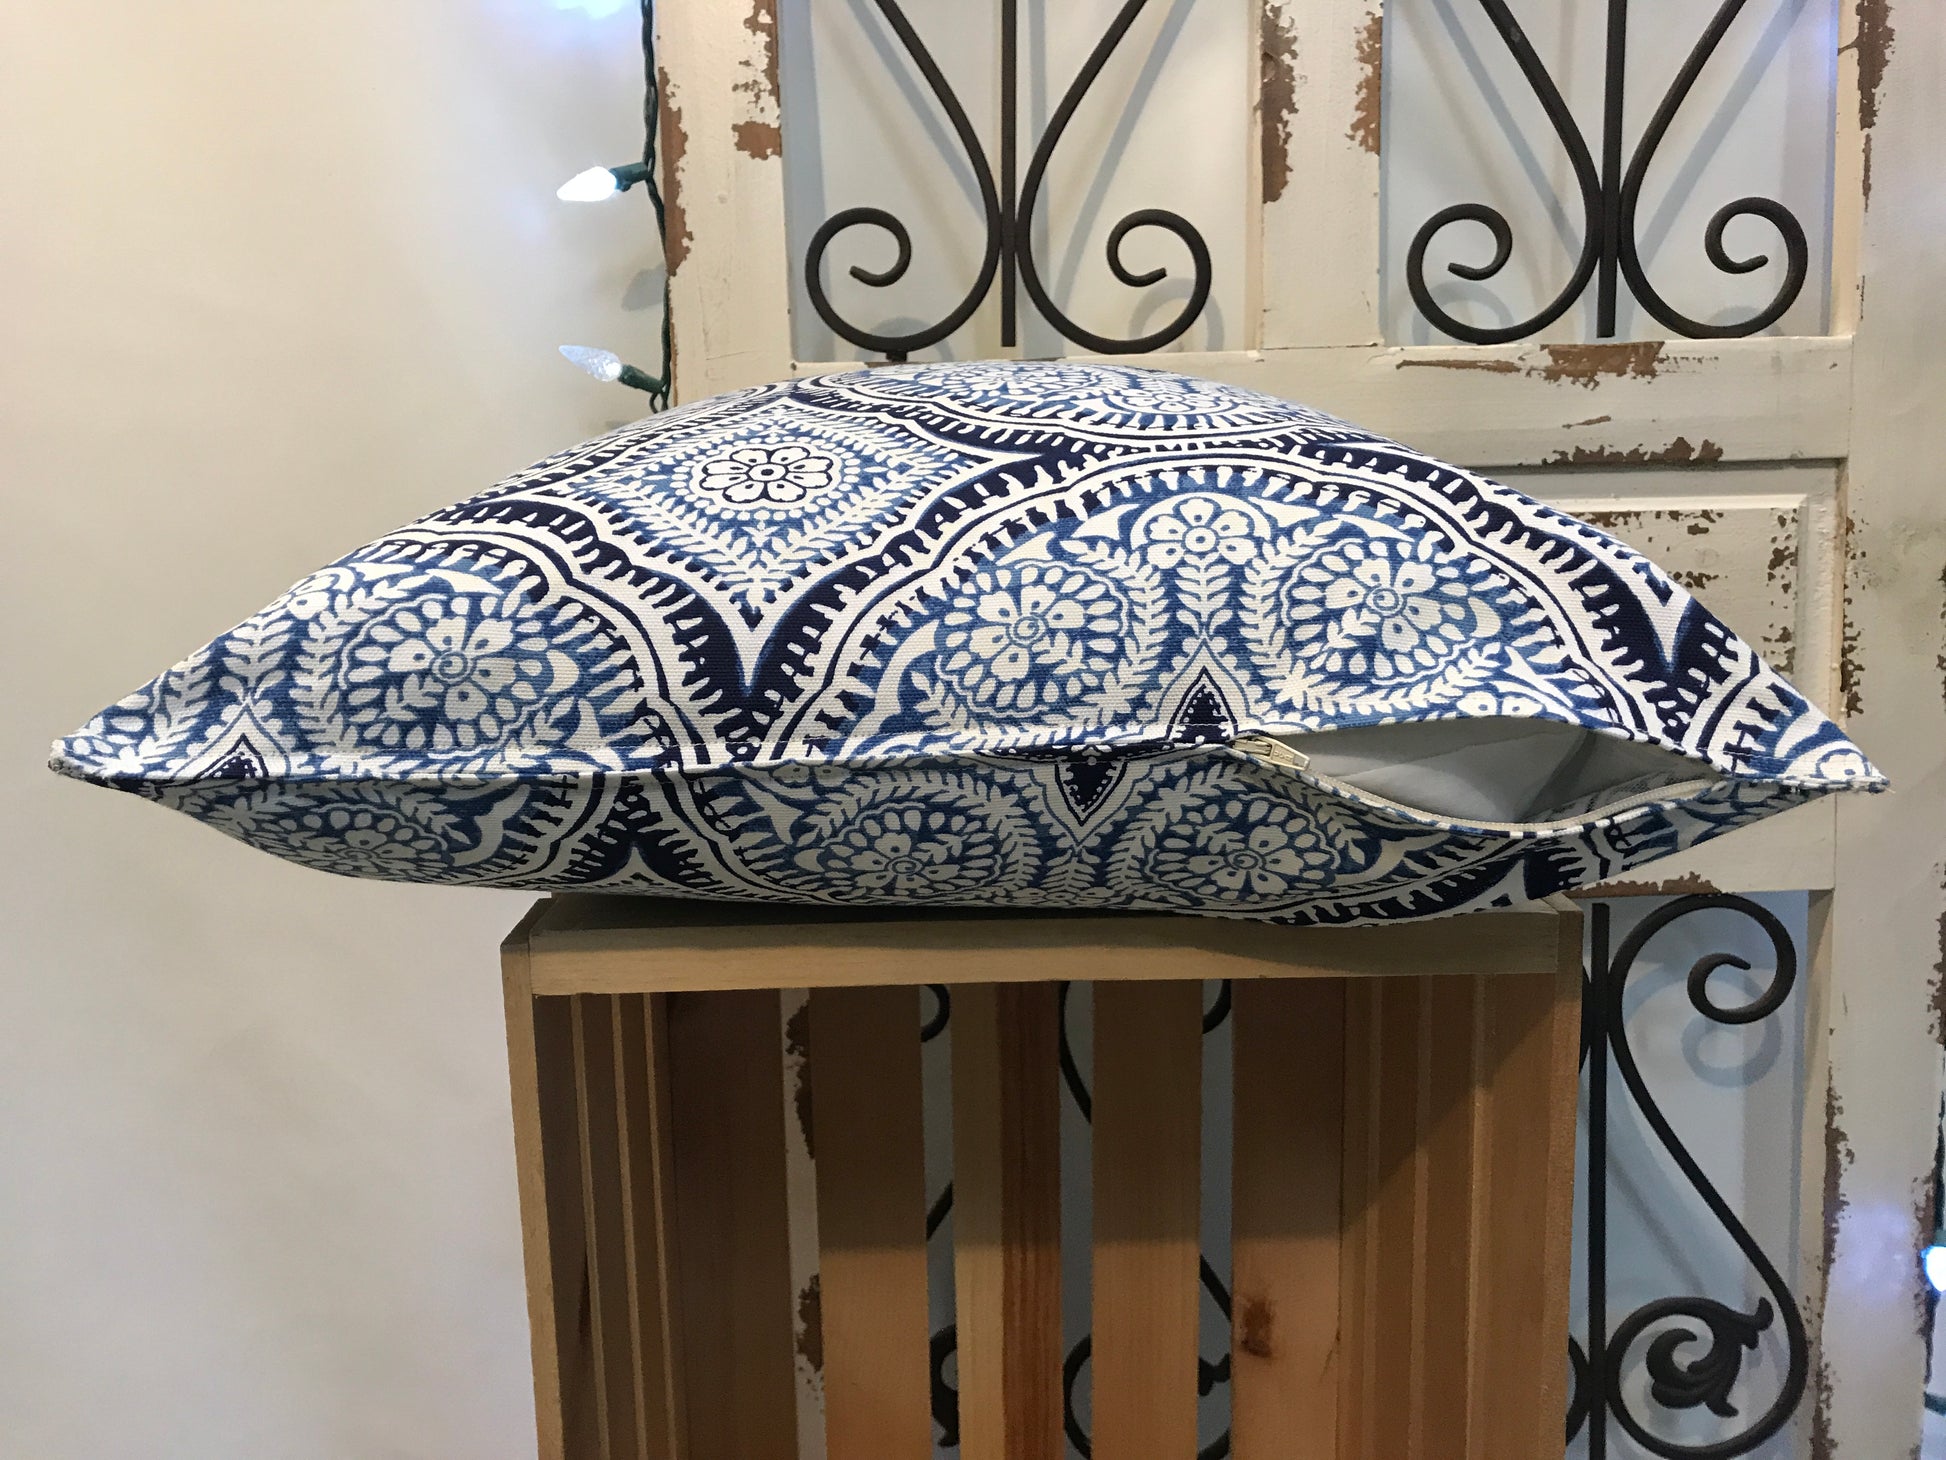 18" Kaleidoscope Blue Pillow Covers - InRugCo Studio & Gift Shop